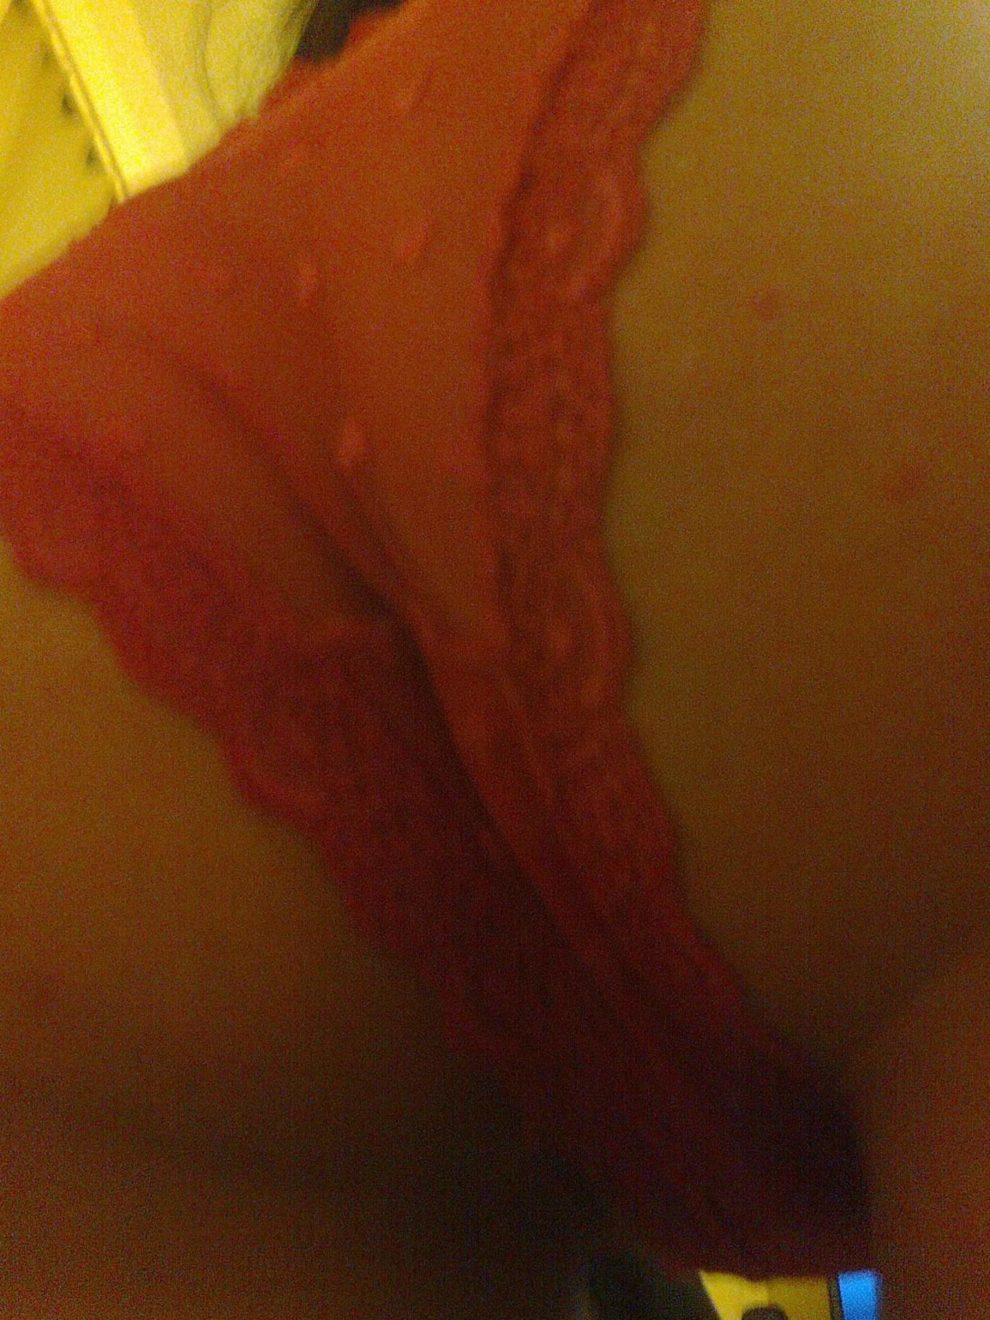 [F] Pink panties